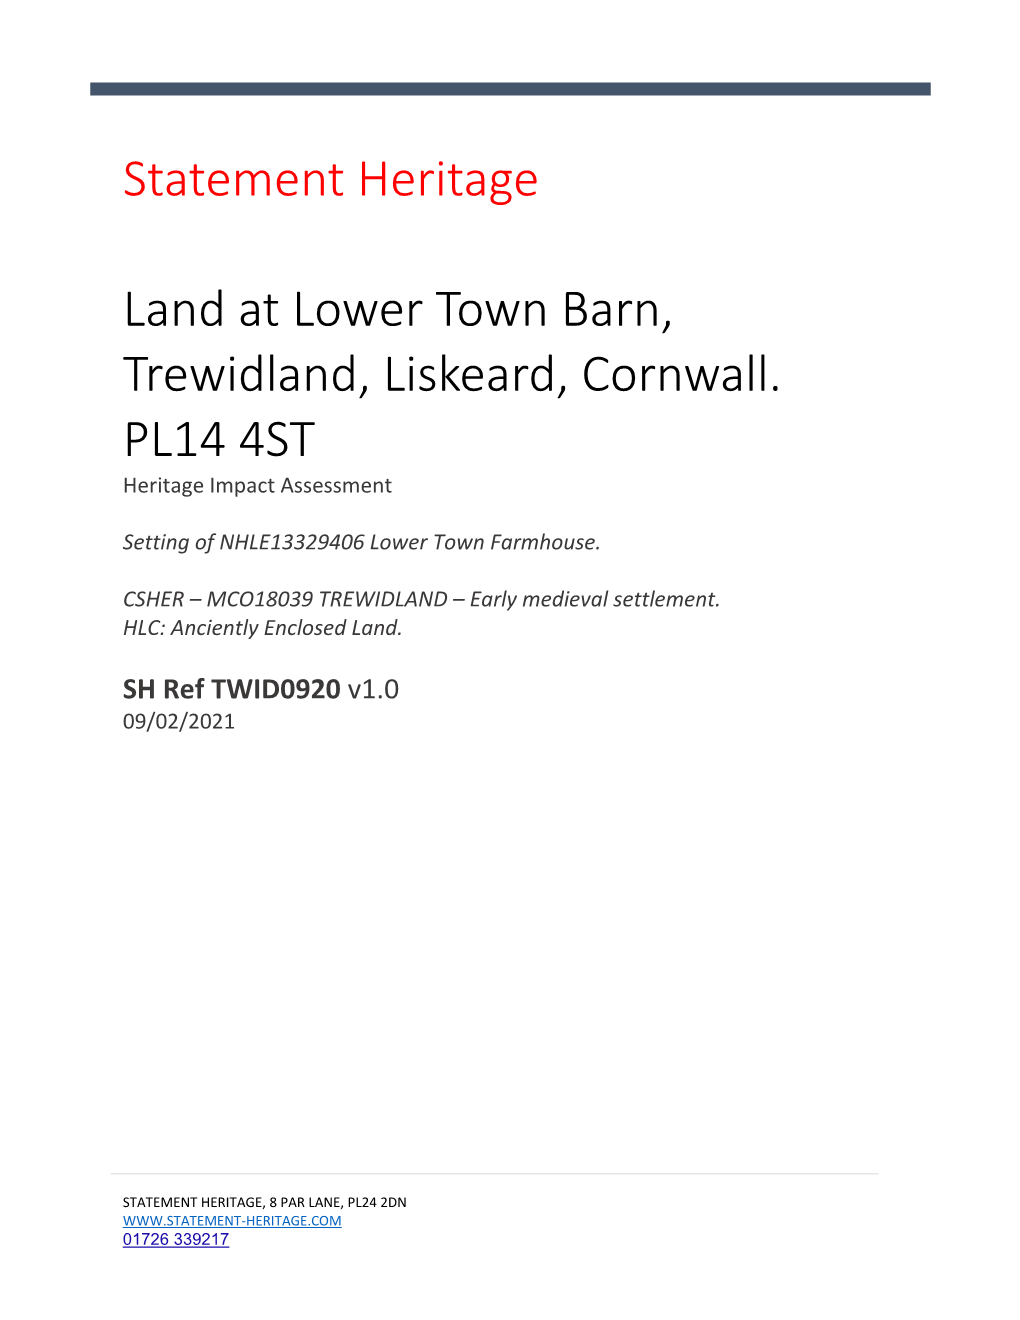 Statement Heritage Land at Lower Town Barn, Trewidland, Liskeard